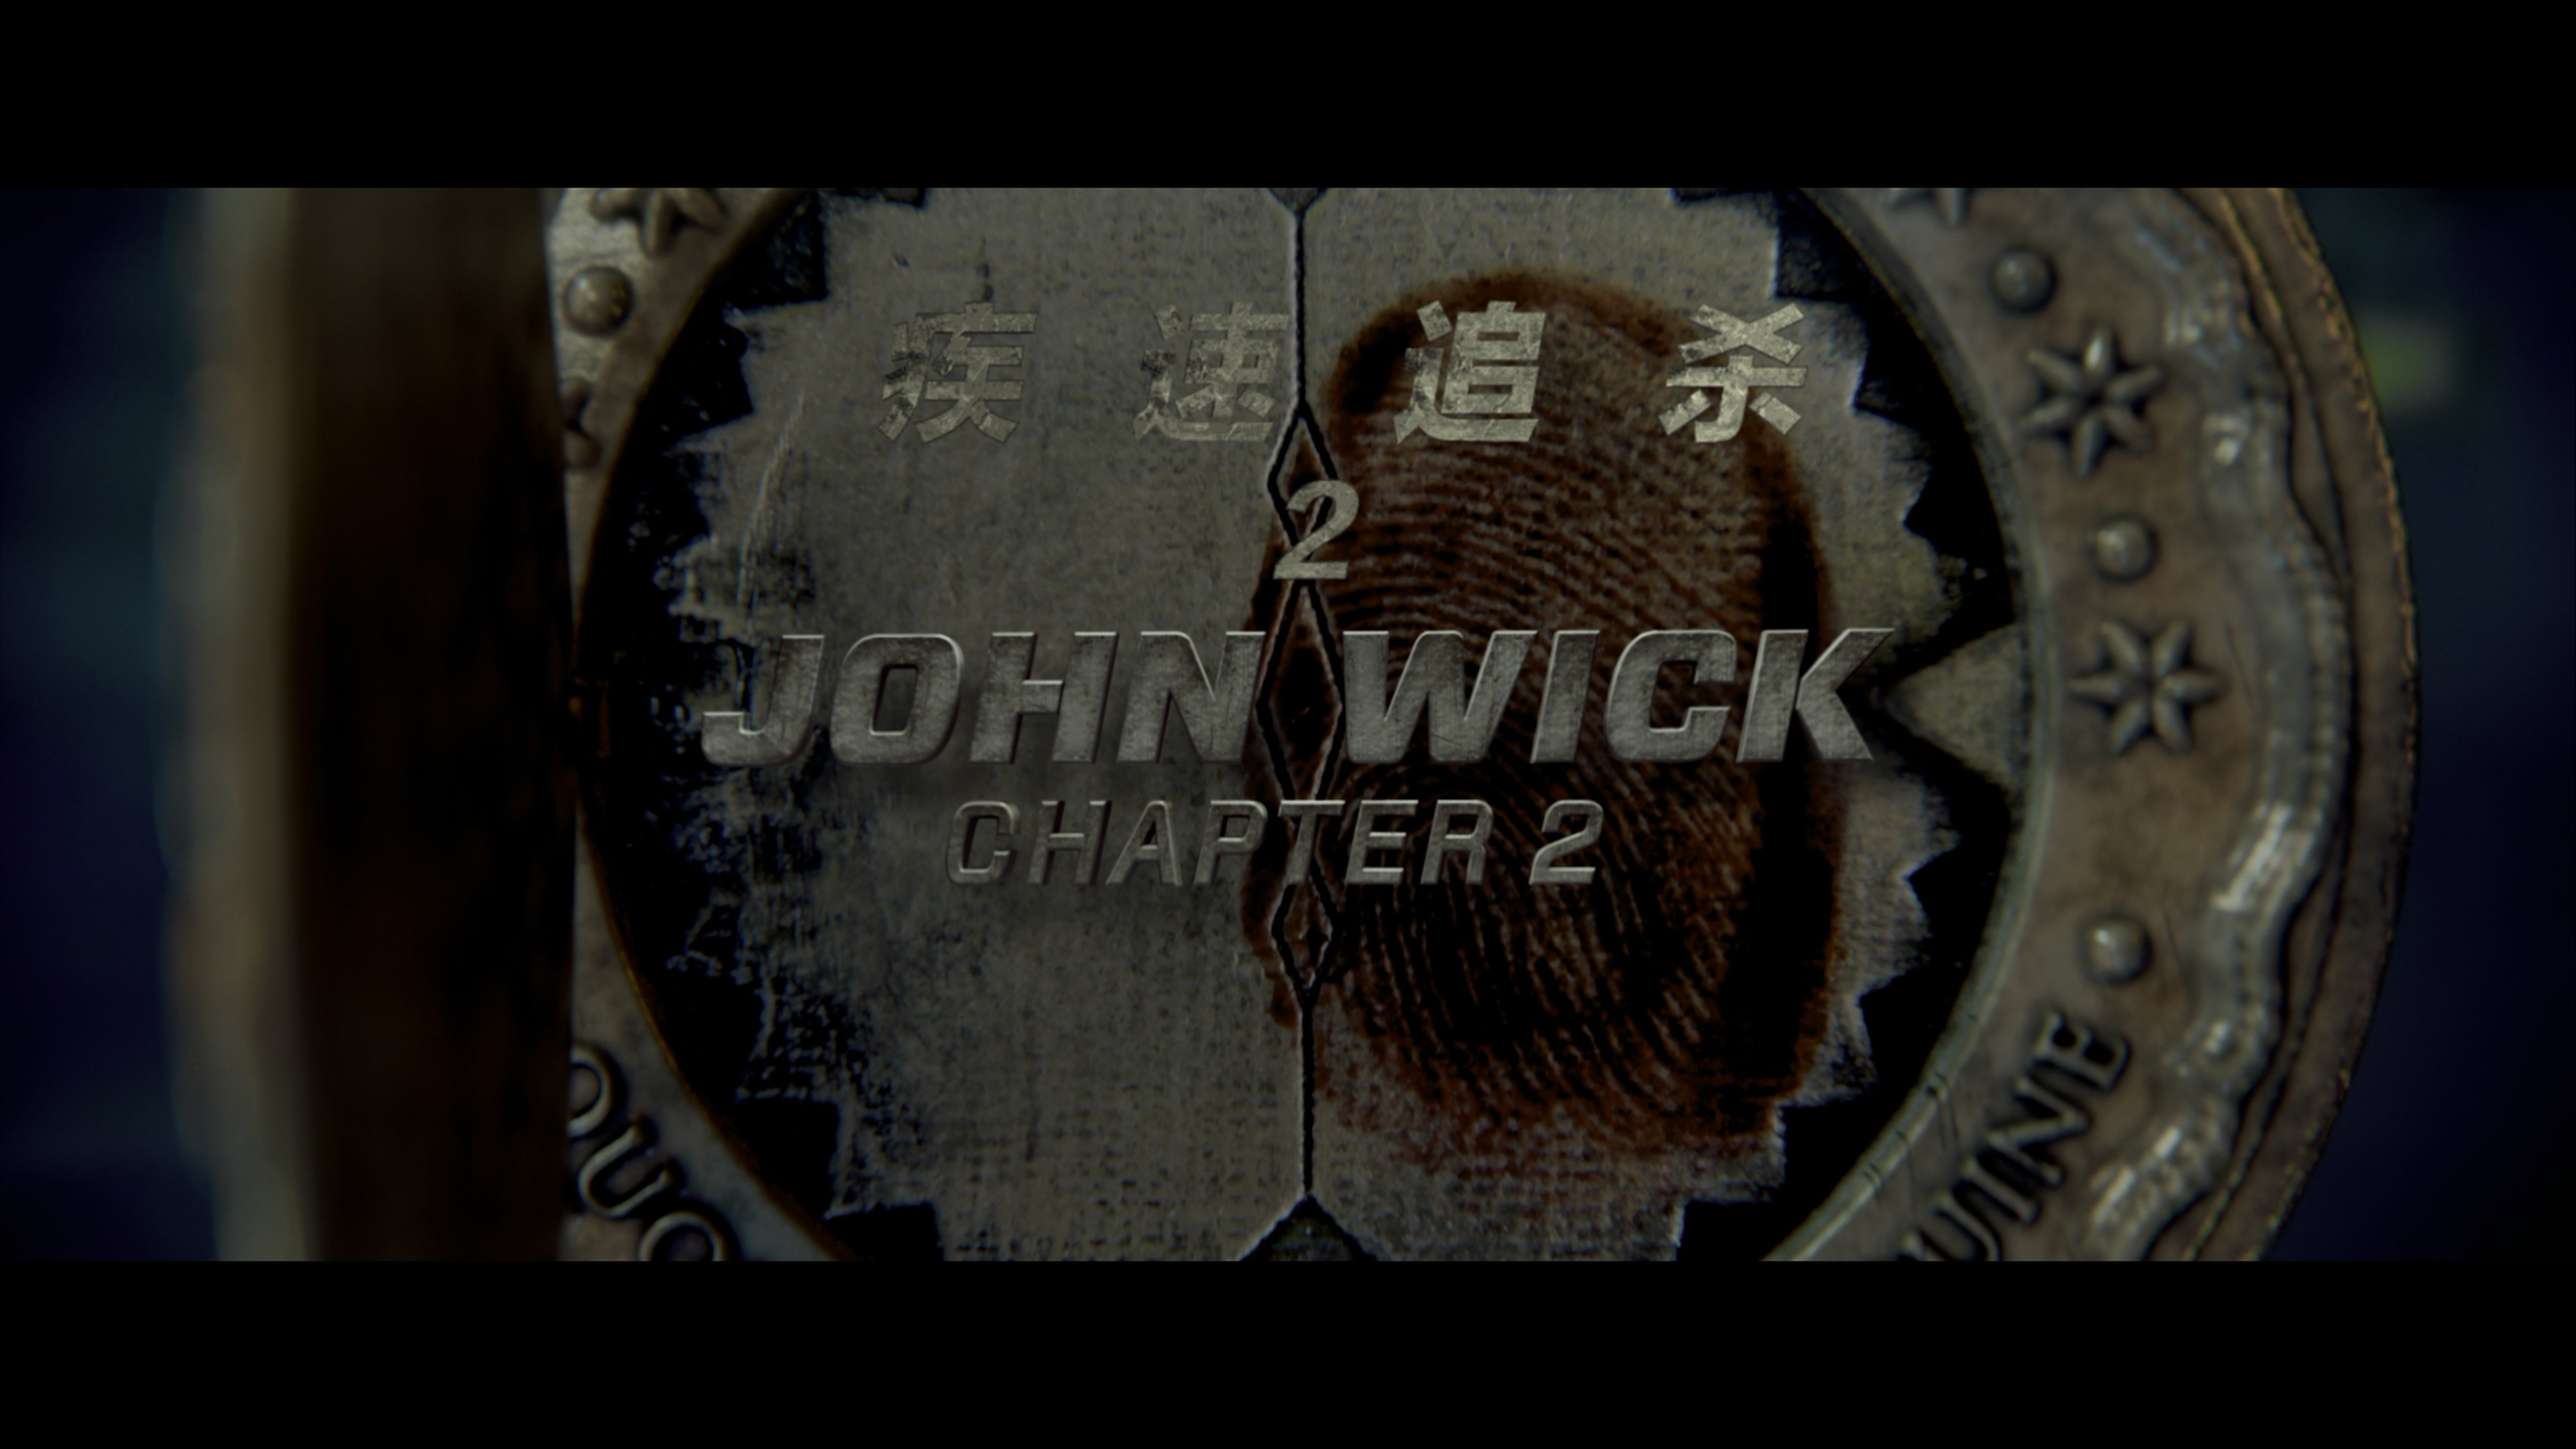 Tyler Bates, Joel J. Richard - John Wick: Chapter 2 (捍衛任務2：殺